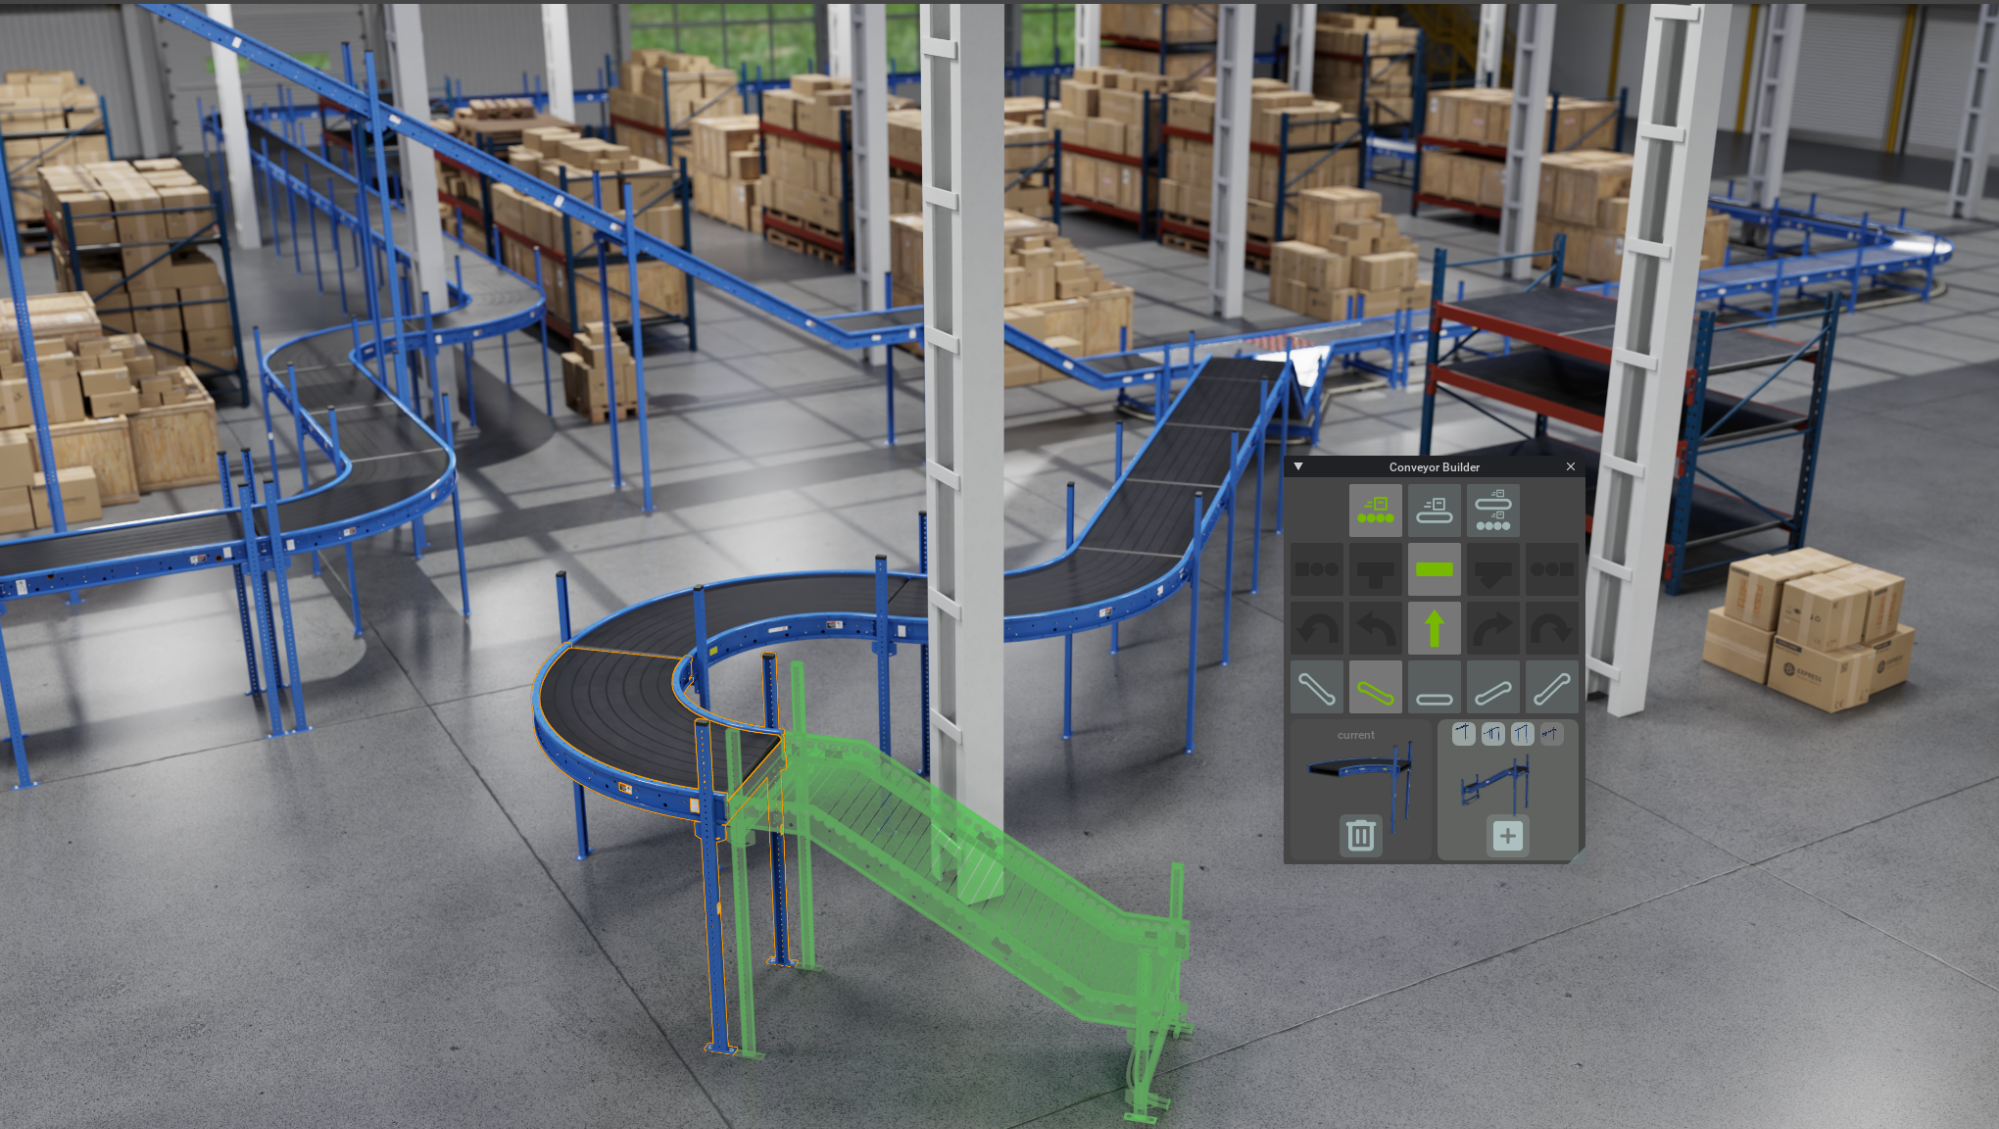 Image of warehouse scene with conveyor belt.